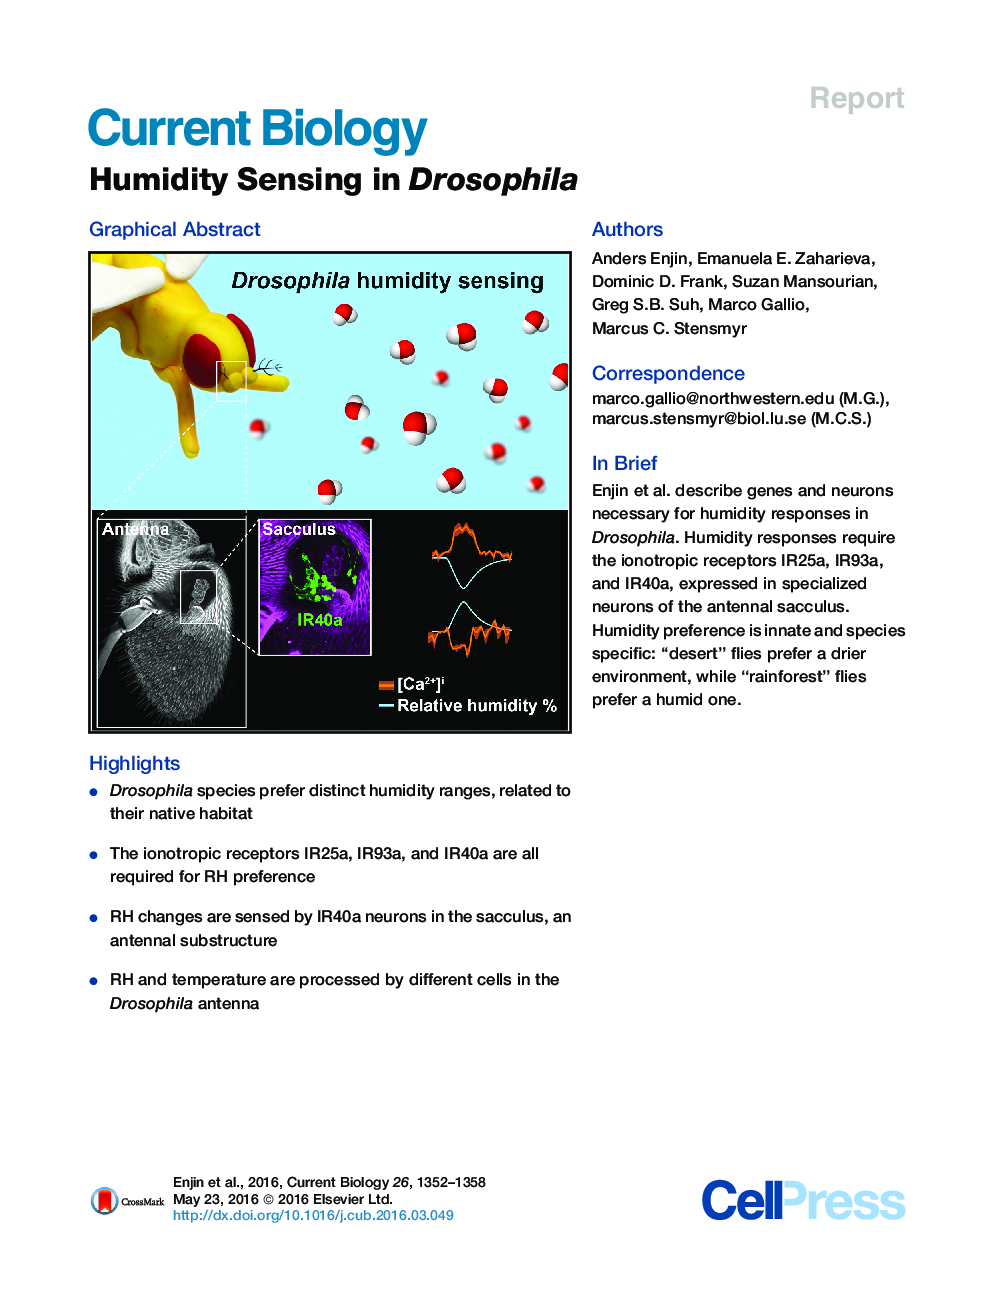 Humidity Sensing in Drosophila